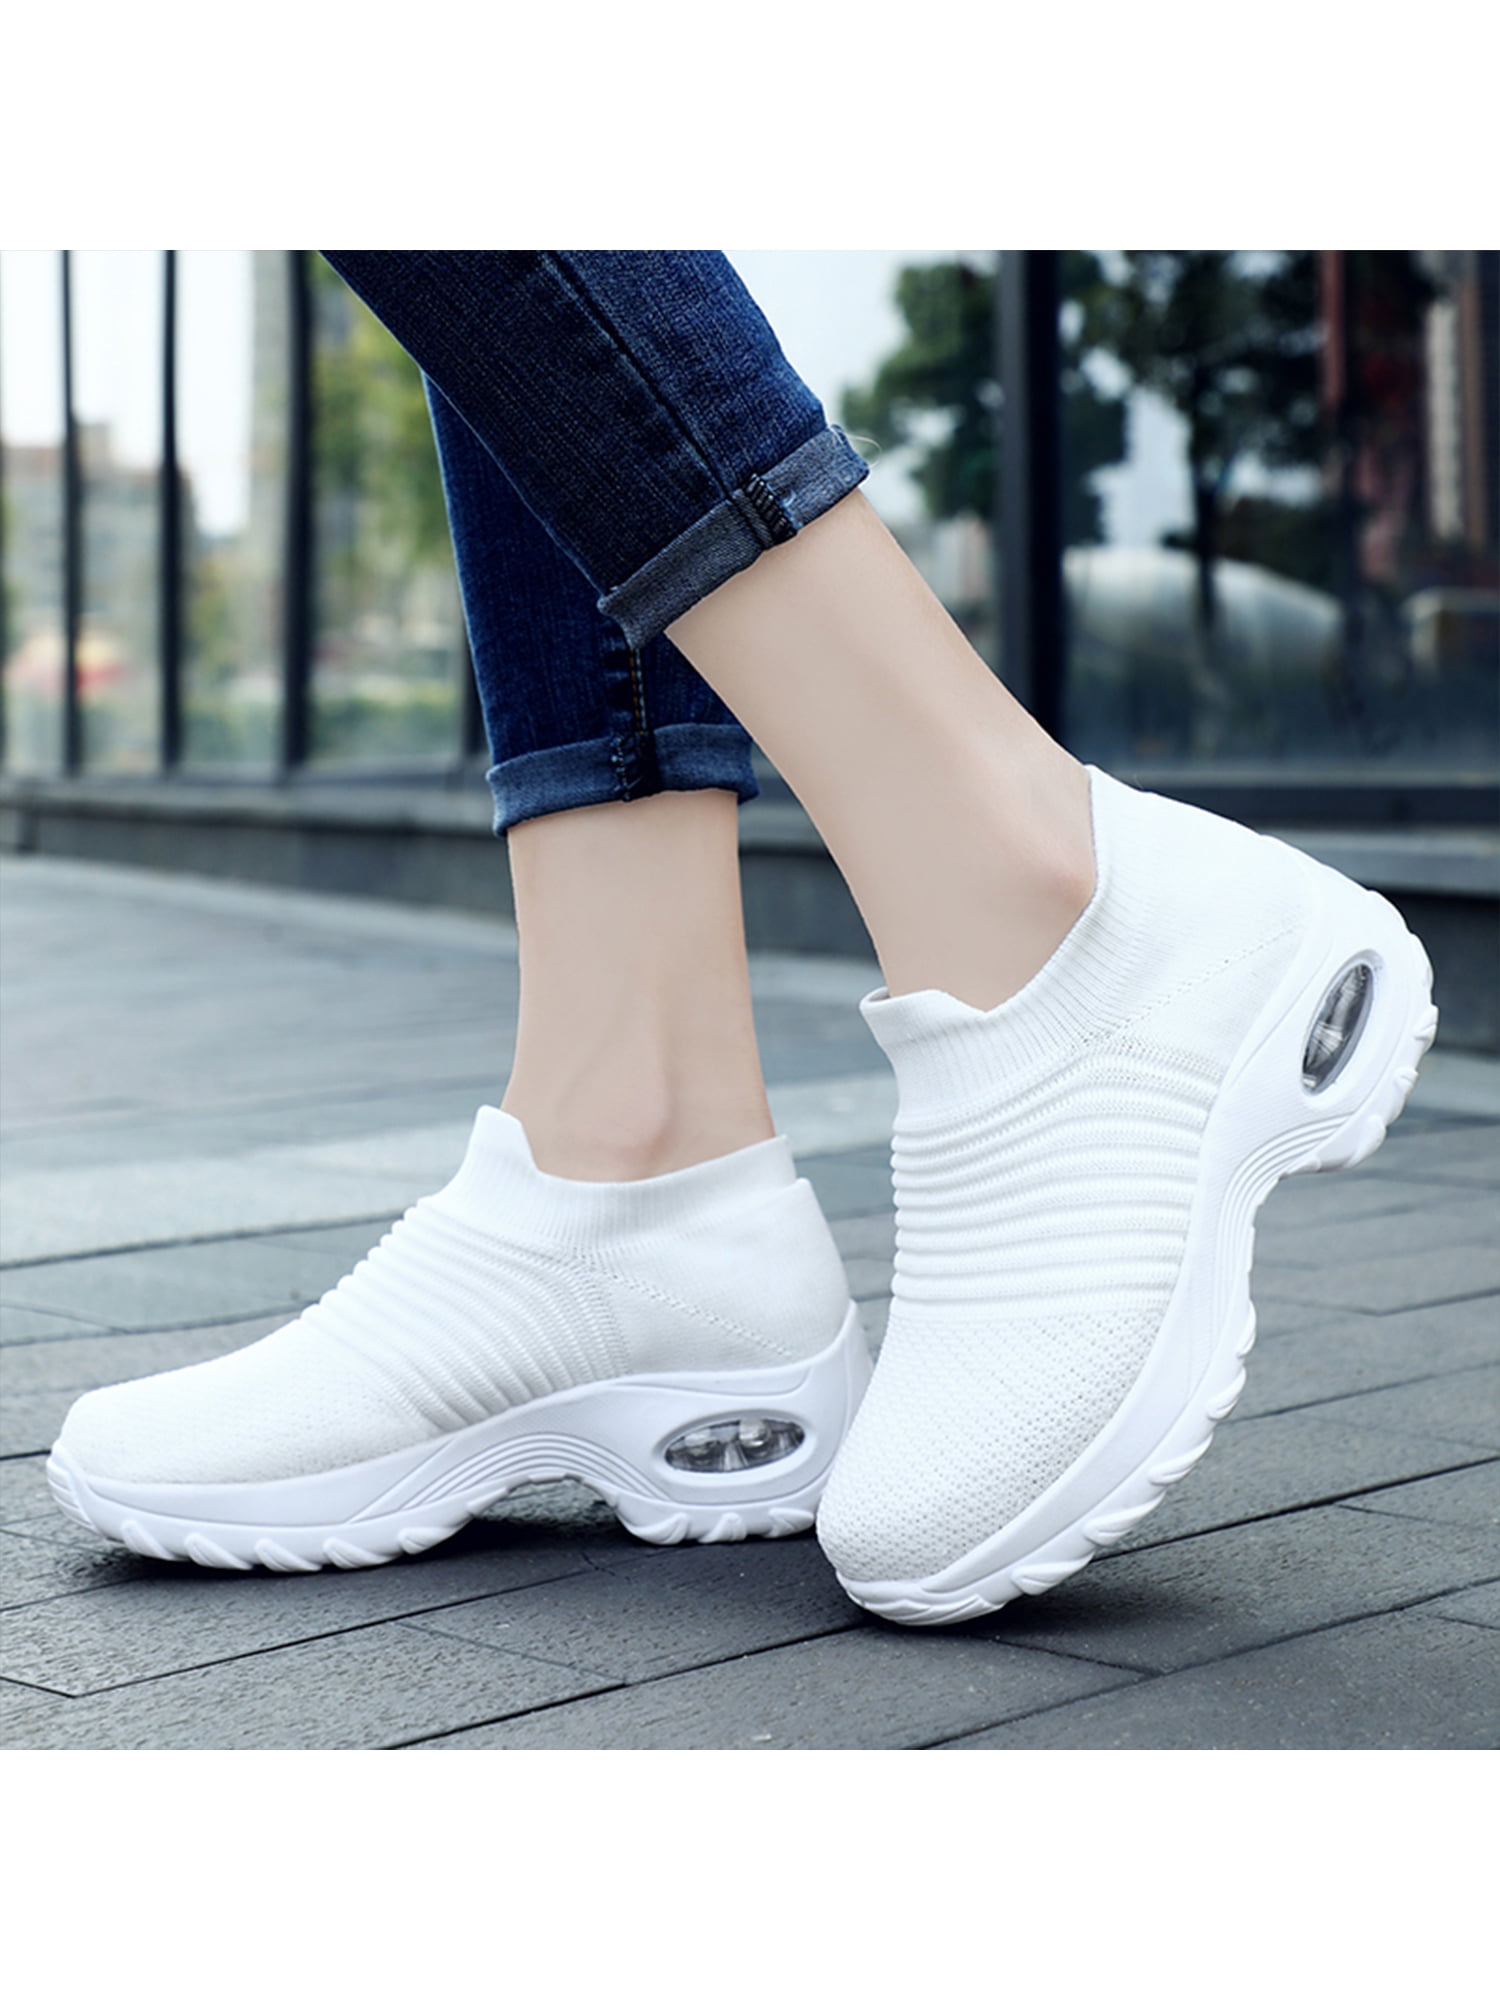 Women's Walking Shoes Sock Sneakers Mesh Slip On Air Cushion Lady Nurse Shoes Jazz Dance Easy Shoes Platform Loafers Black&White,9 